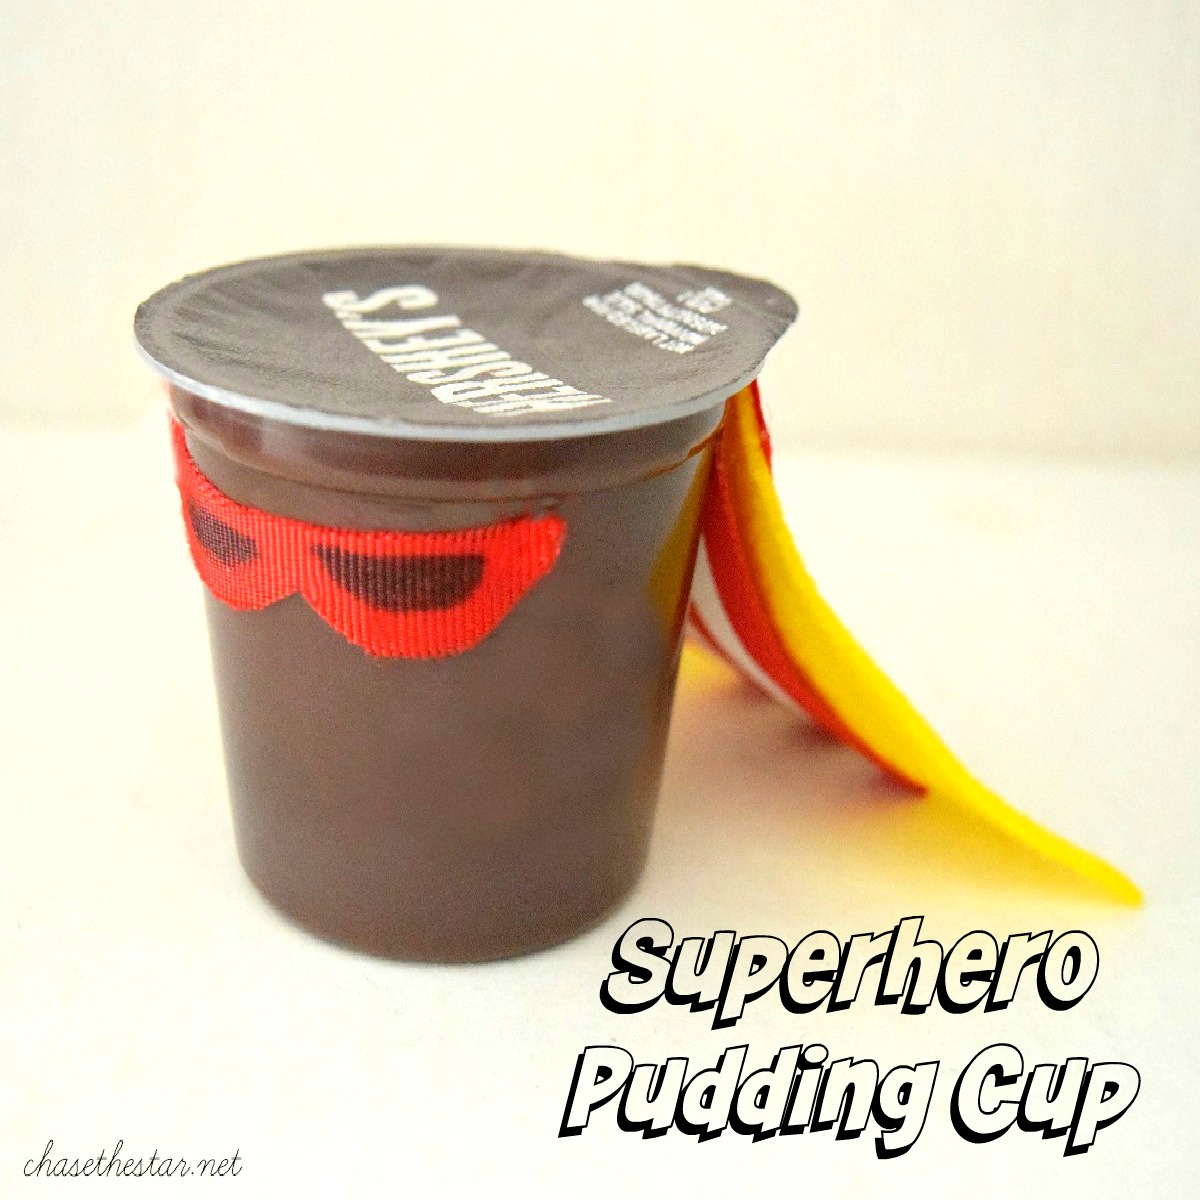 Superhero Pudding Cup #ReadySetSnack #CollectiveBias #hersheys feature